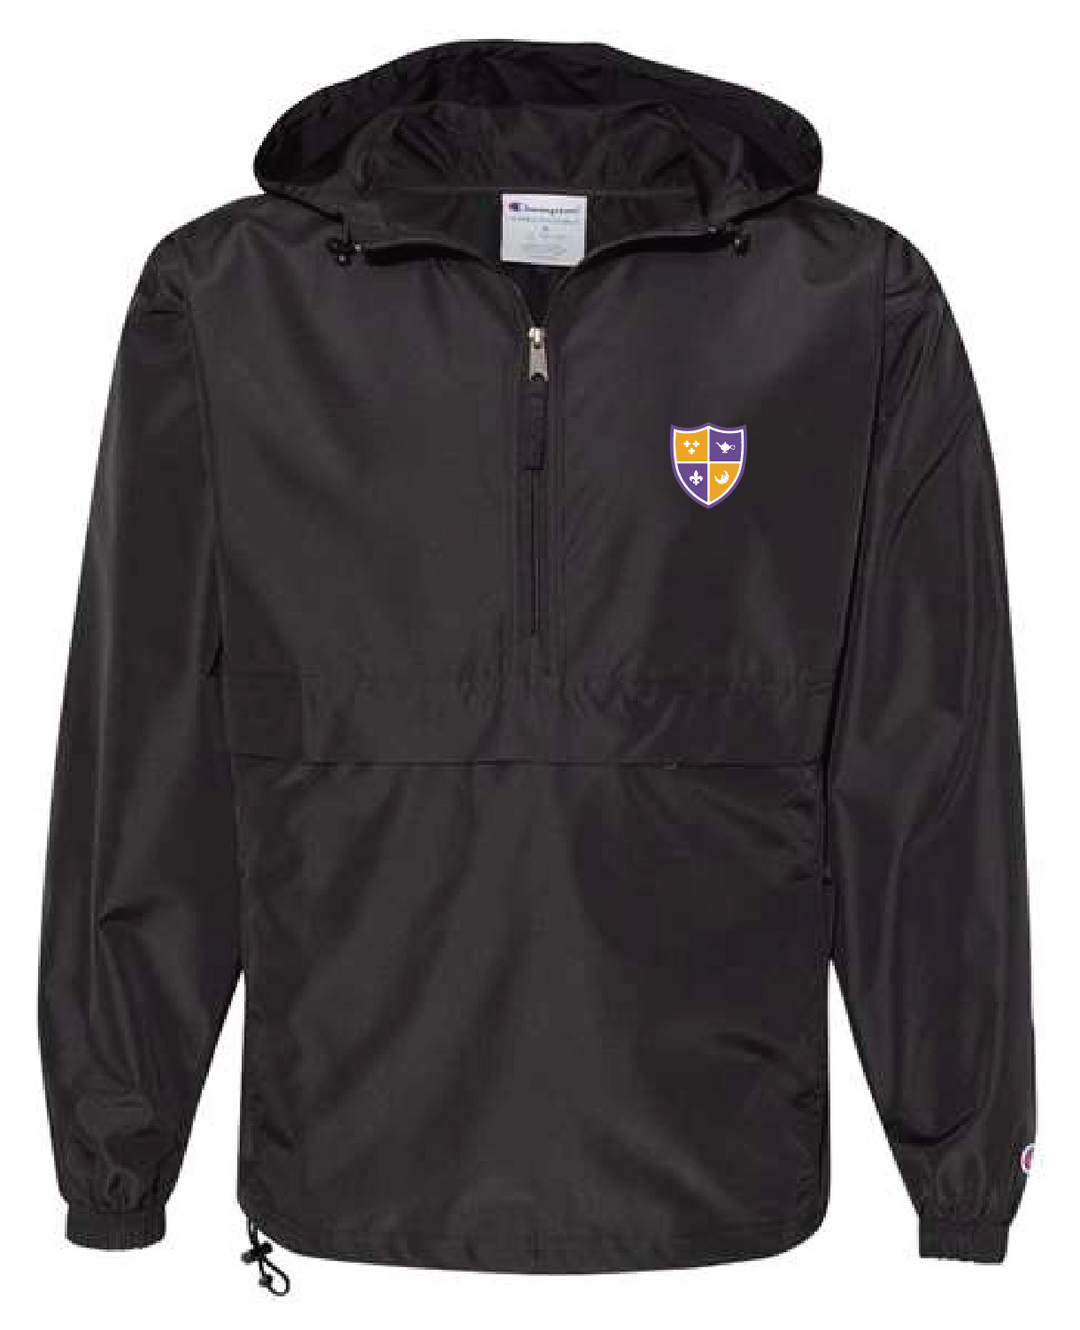 SAE Shield Pullover Rain Jacket by Champion - The Sigma Alpha Epsilon Store